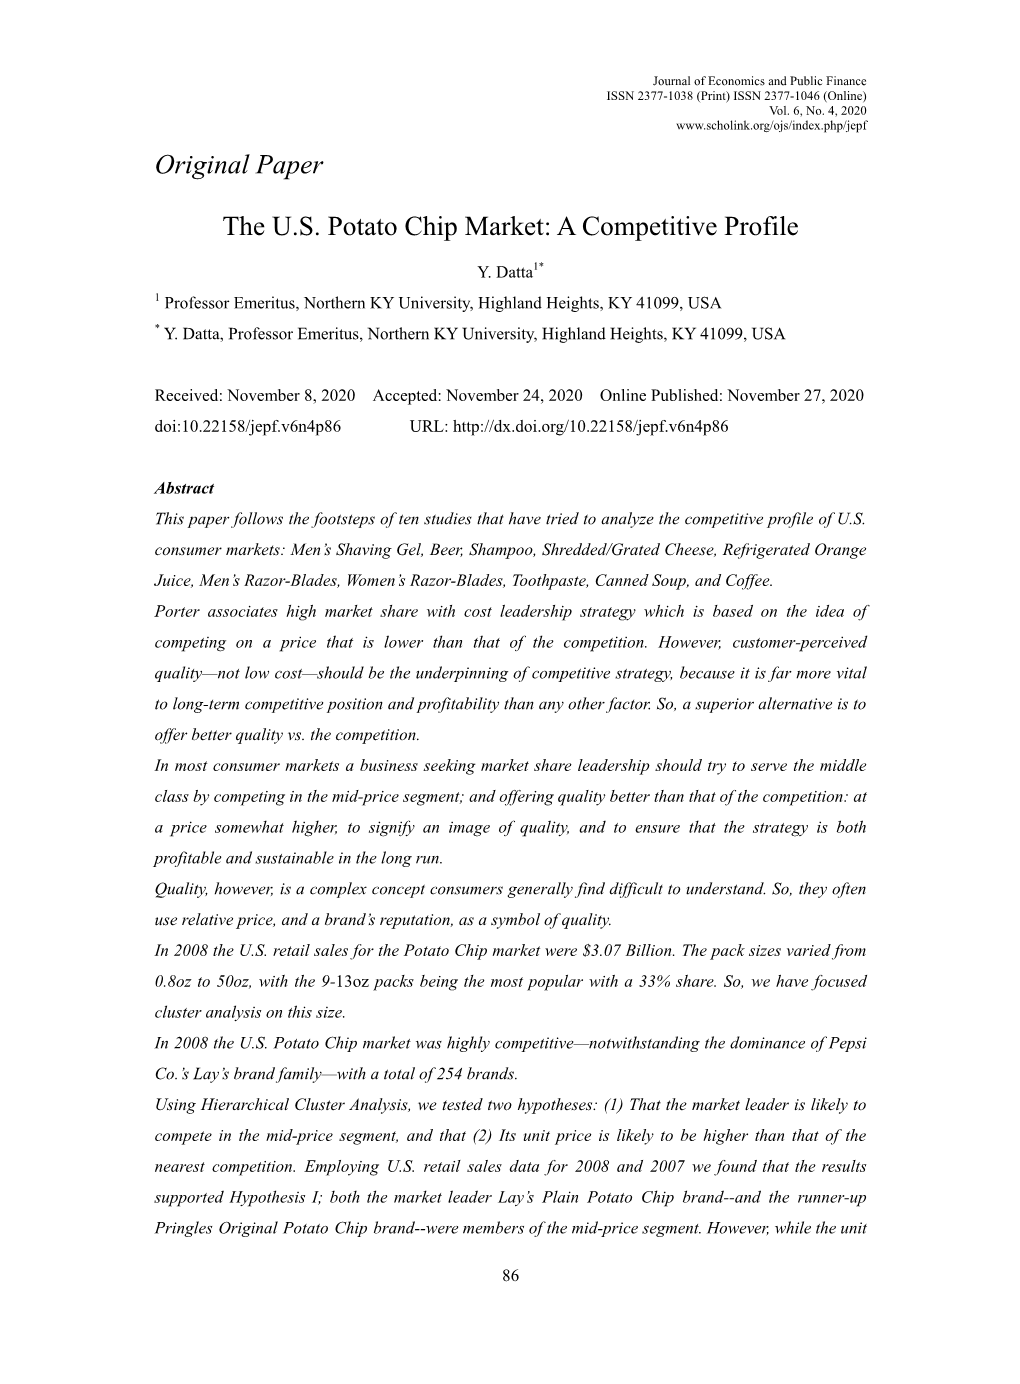 Original Paper the US Potato Chip Market: a Competitive Profile